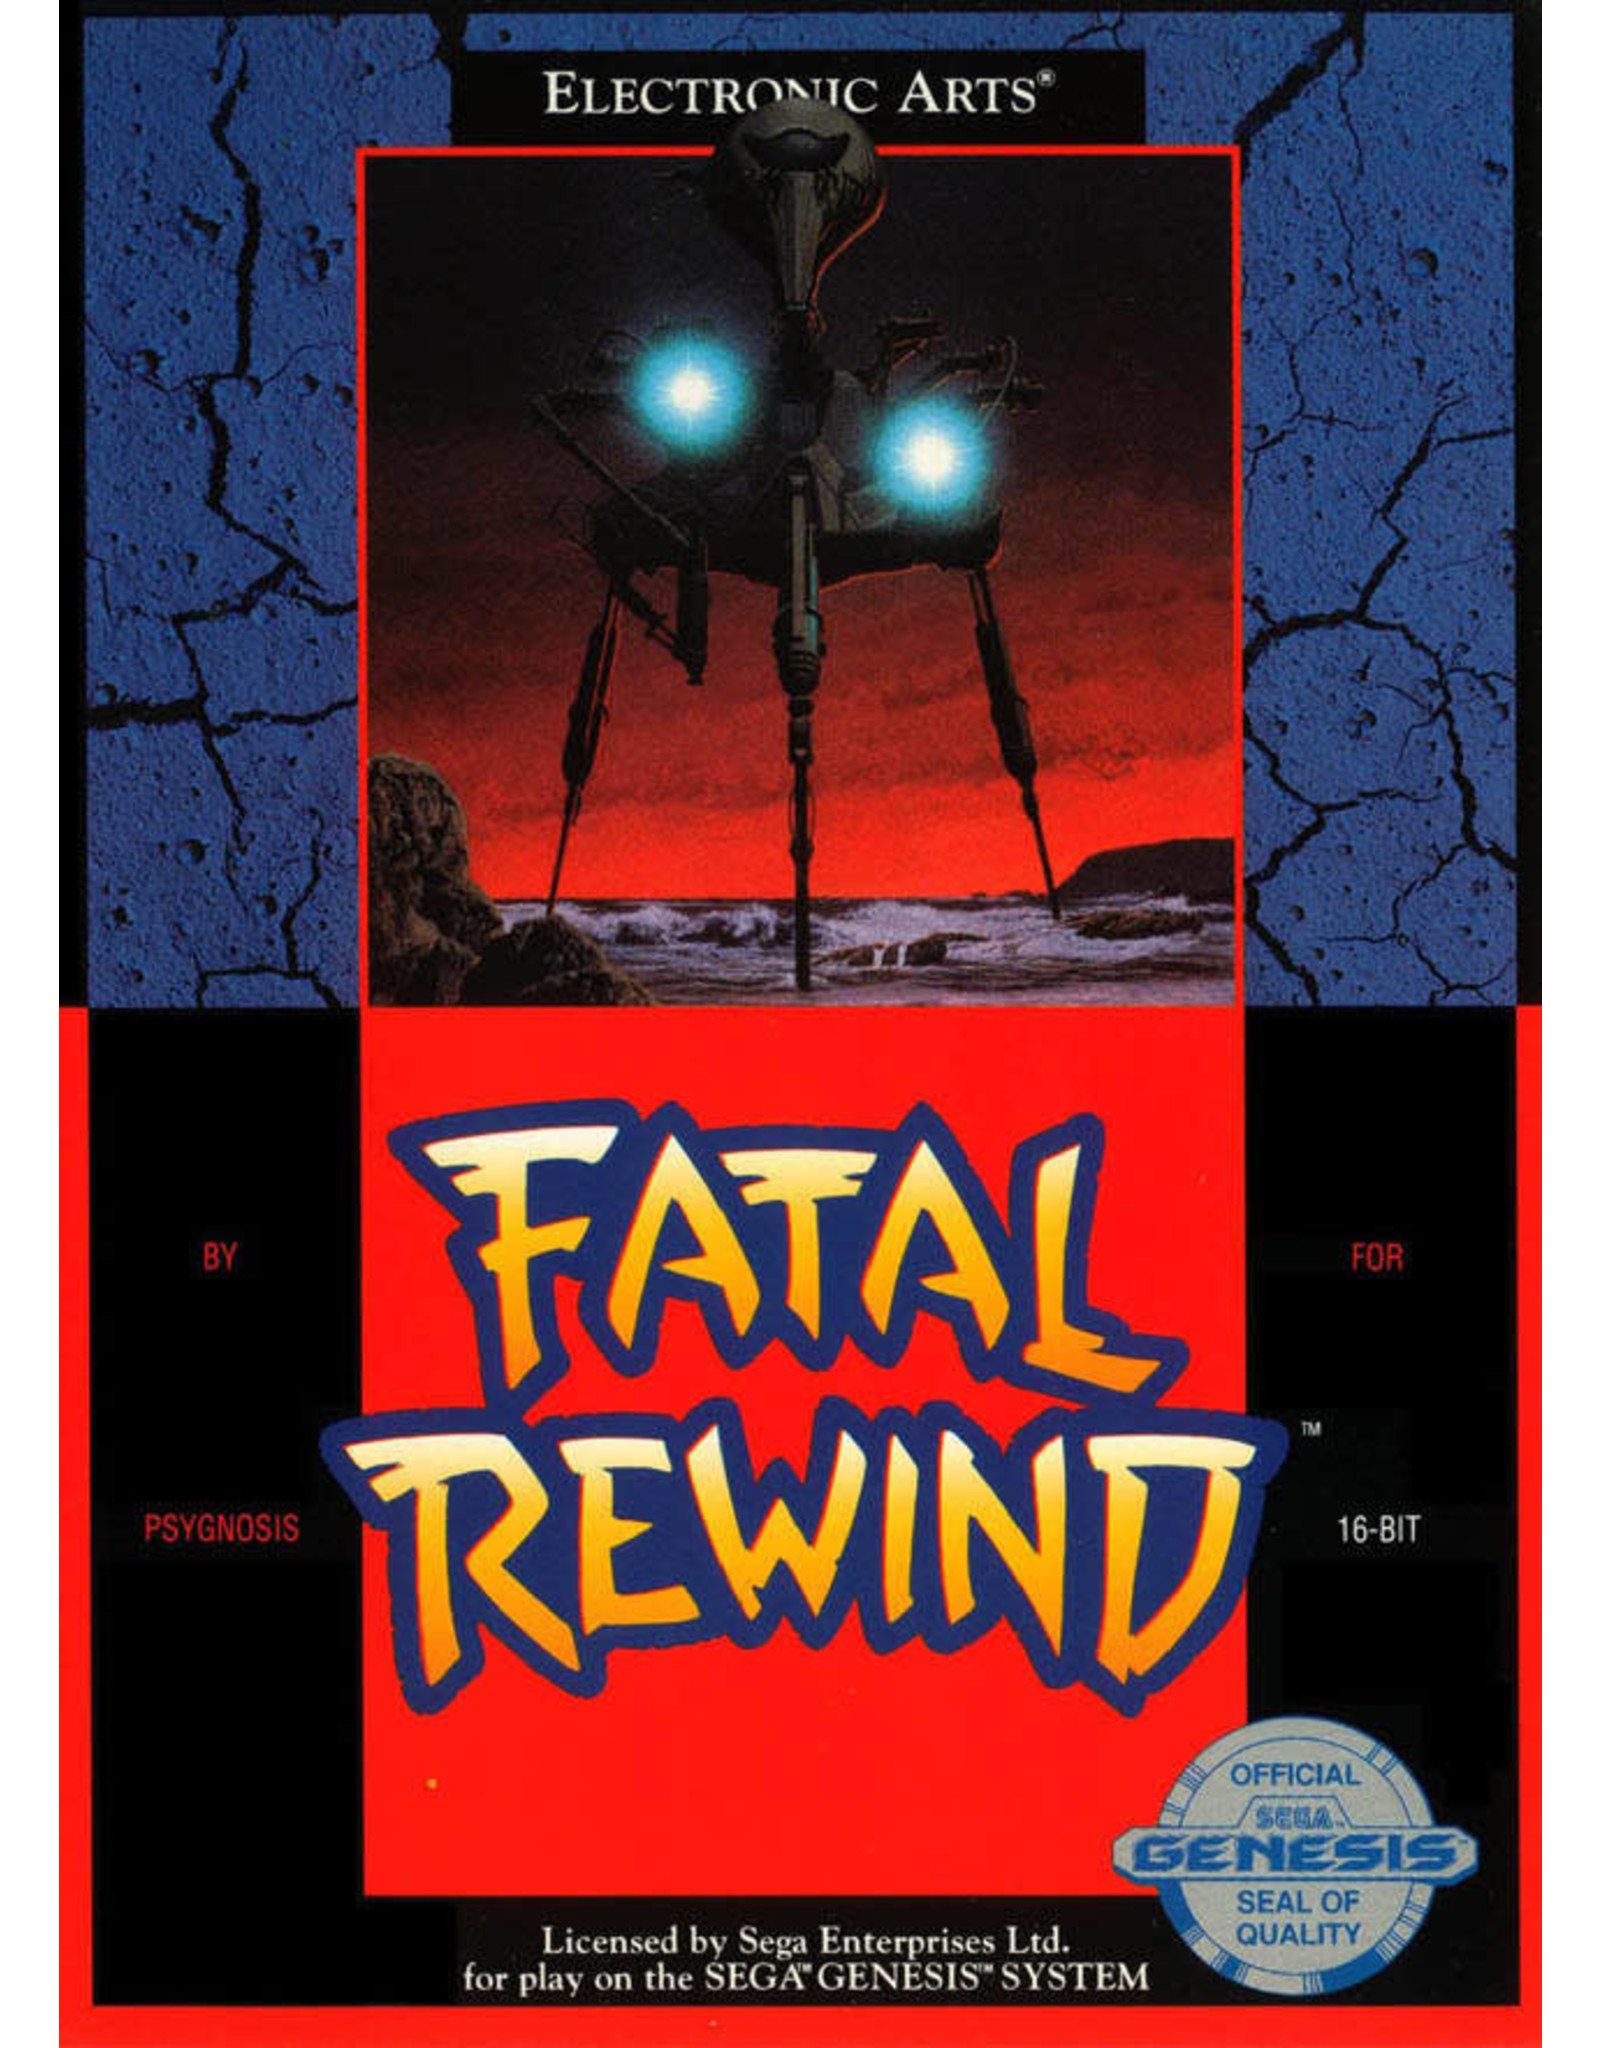 Sega Genesis Fatal Rewind Killing Game Show (Cart Only)